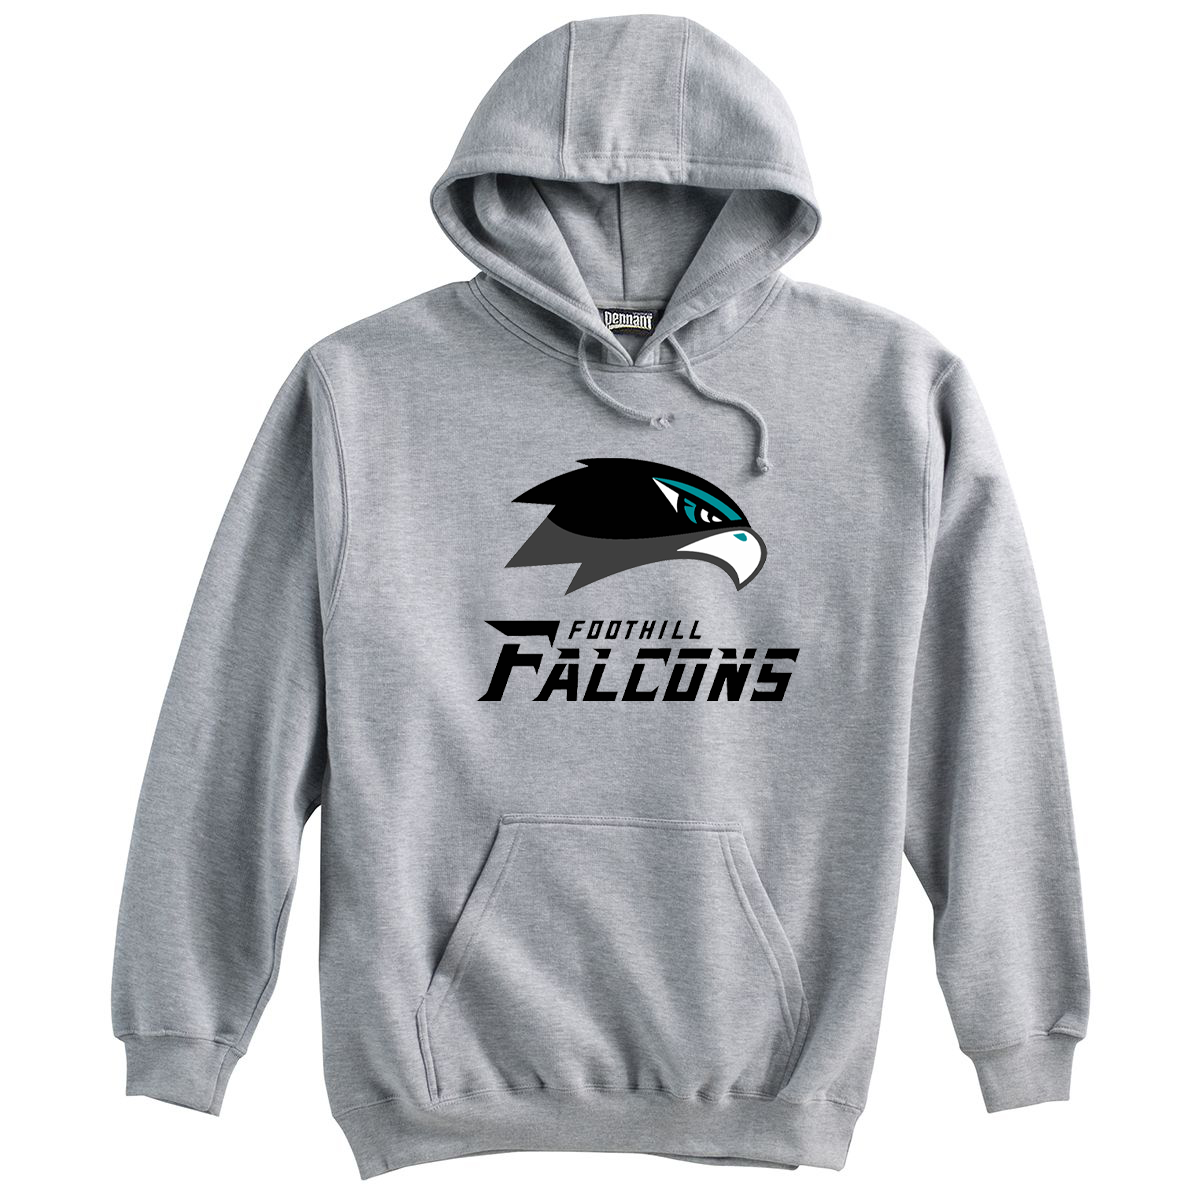 Foothill Falcons Sweatshirt